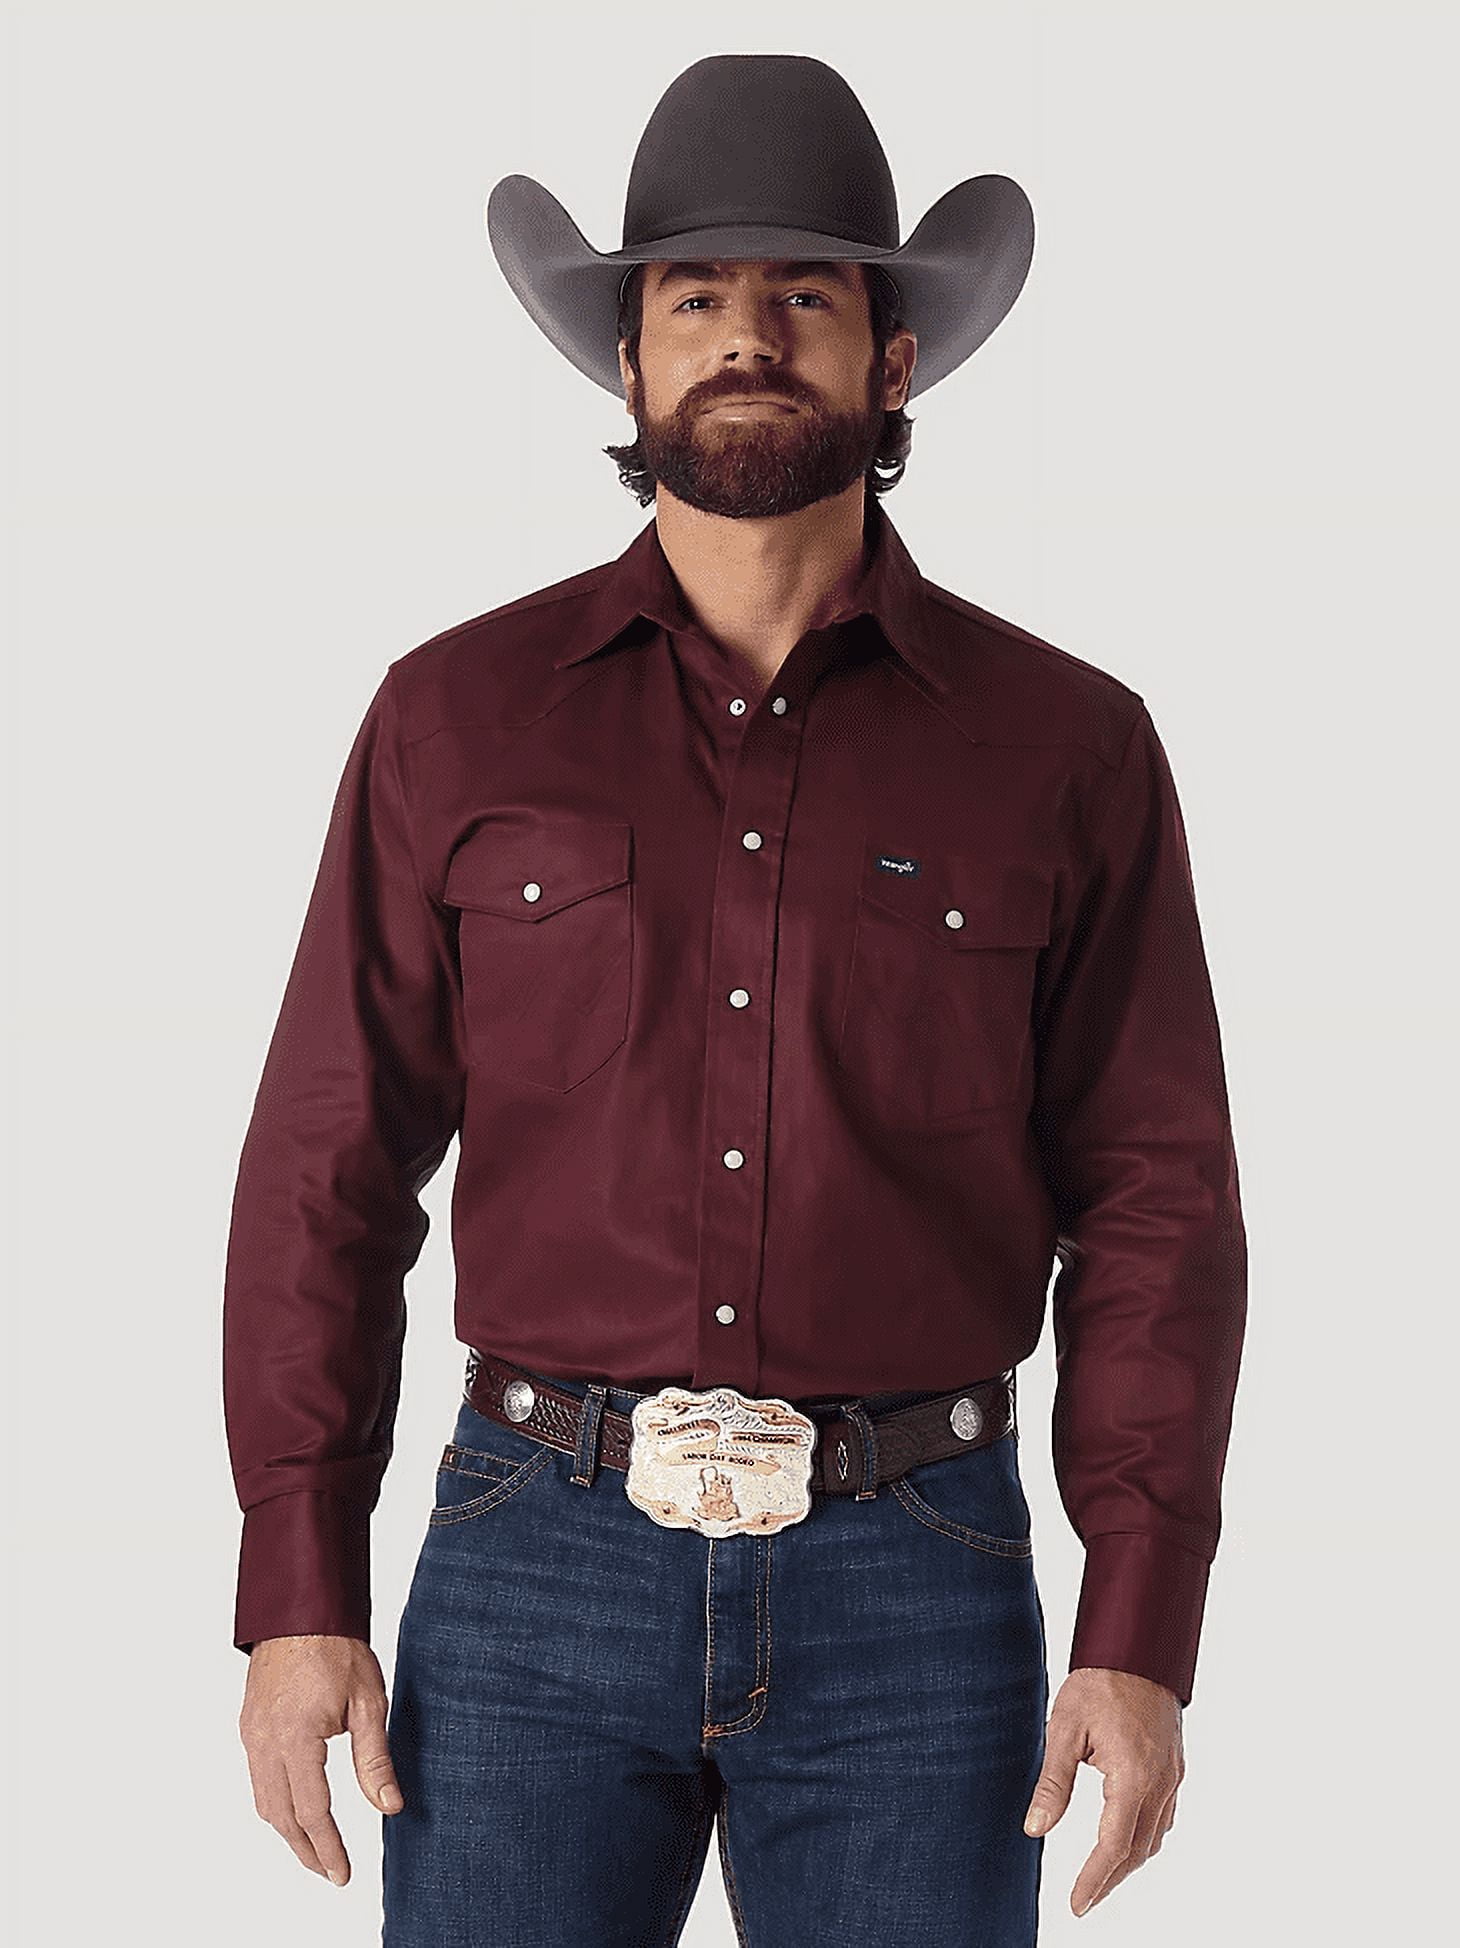 Wrangler Cowboy Cut Western Snap Maroon - Mens Shirt - Ms70719 ...